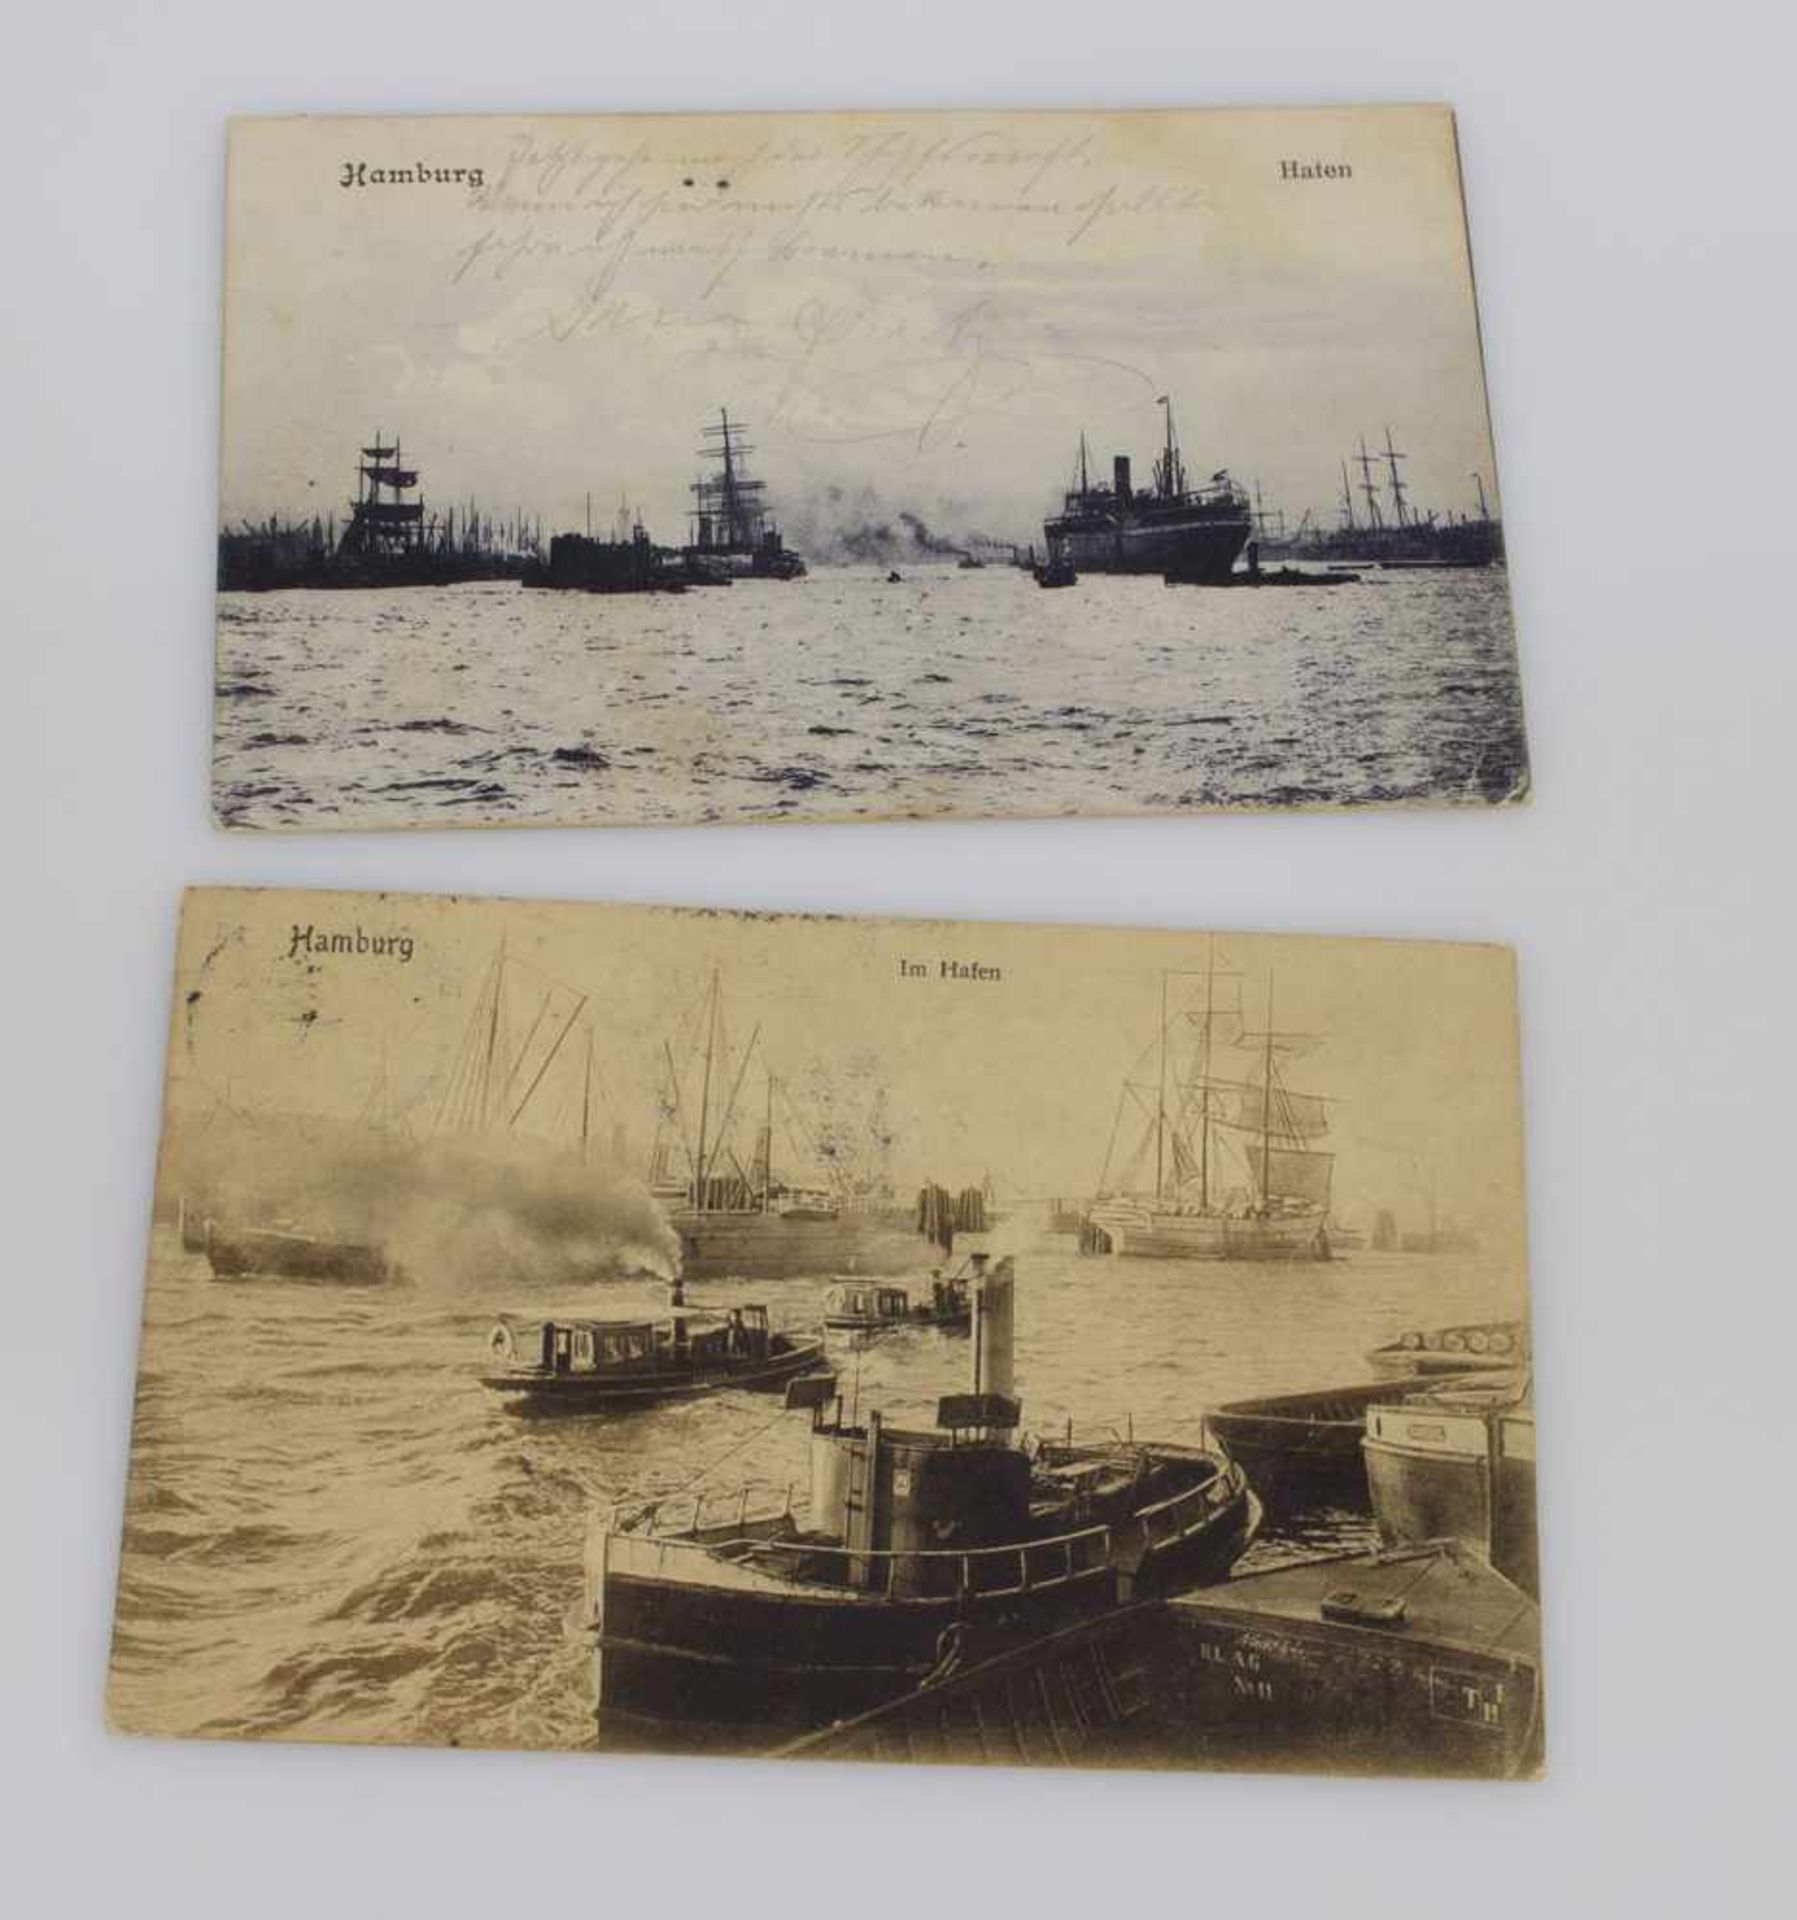 2 AnsichtskartenHamburg um 1907, Hamburg im Hafen/ Hamburg Hafen